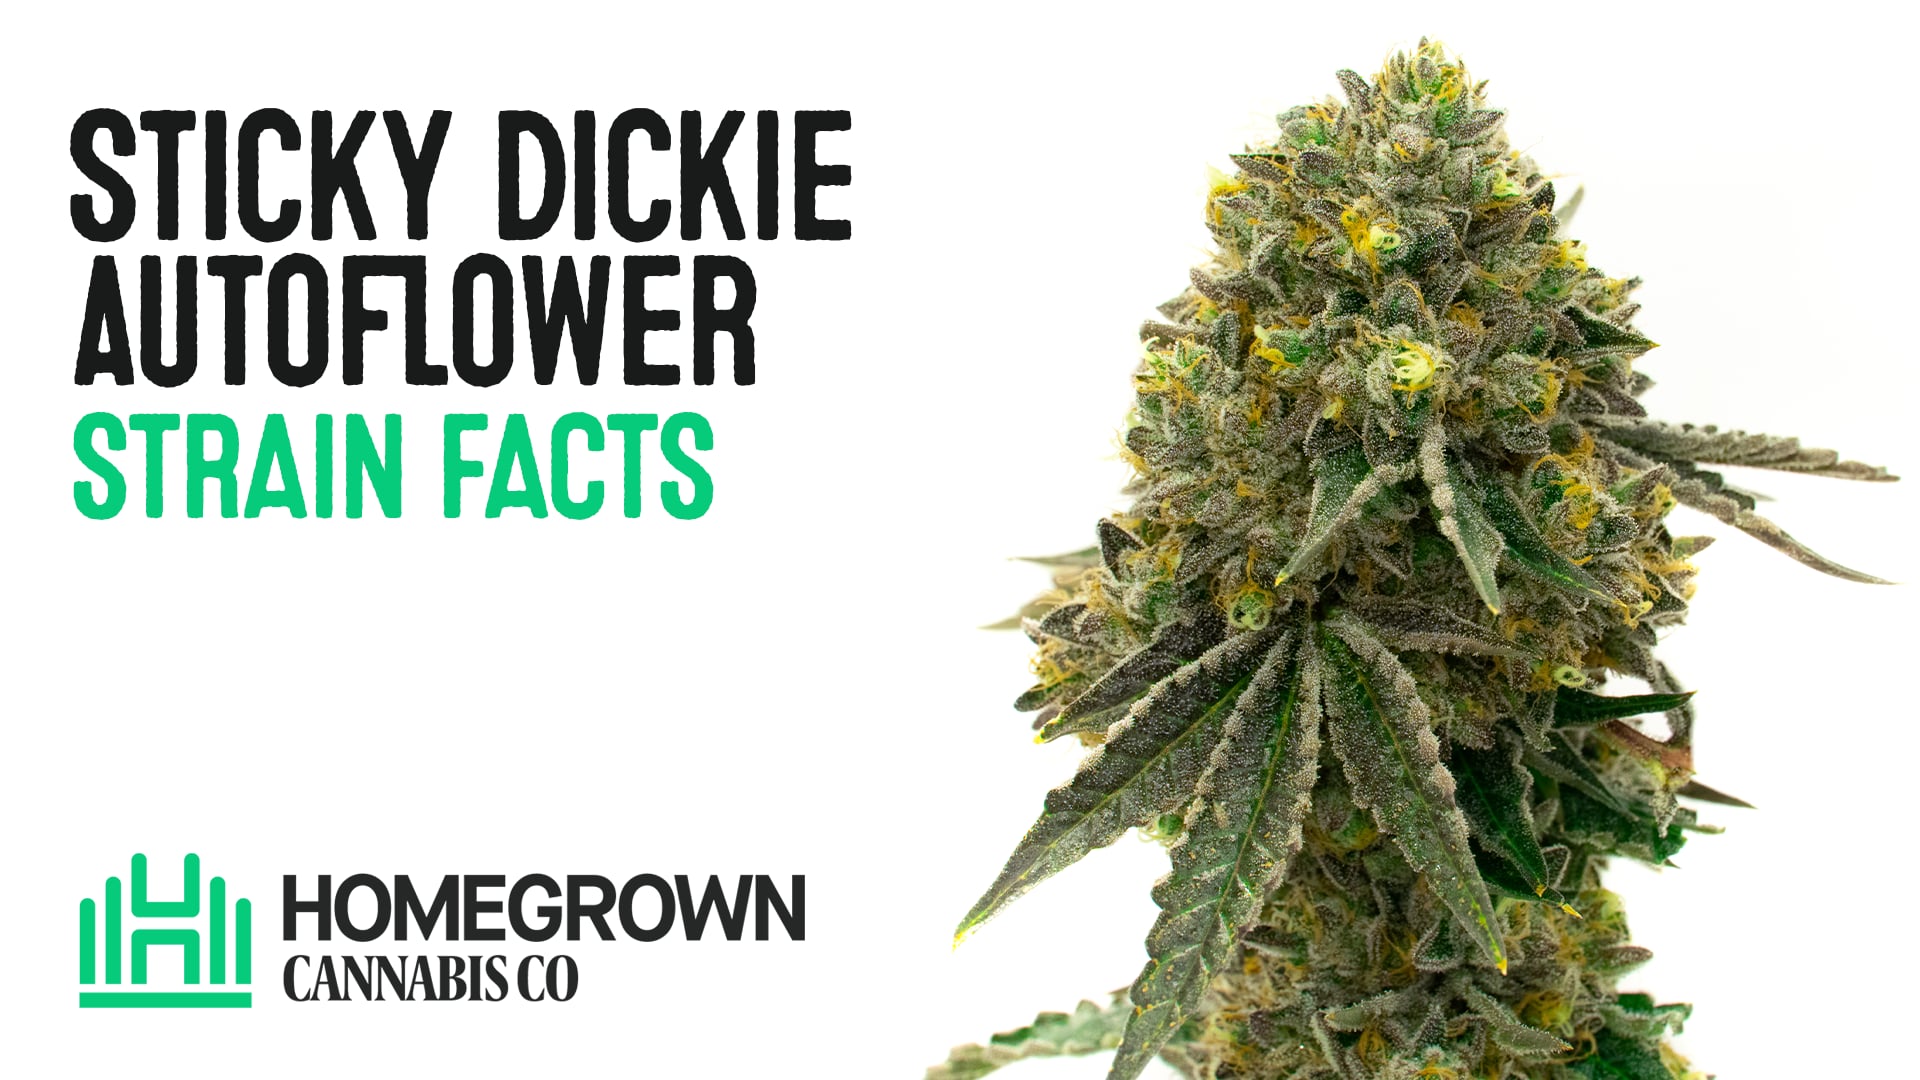 Kig forbi Berygtet klodset Sticky Dickie Auto Seeds | Homegrown Cannabis Co.